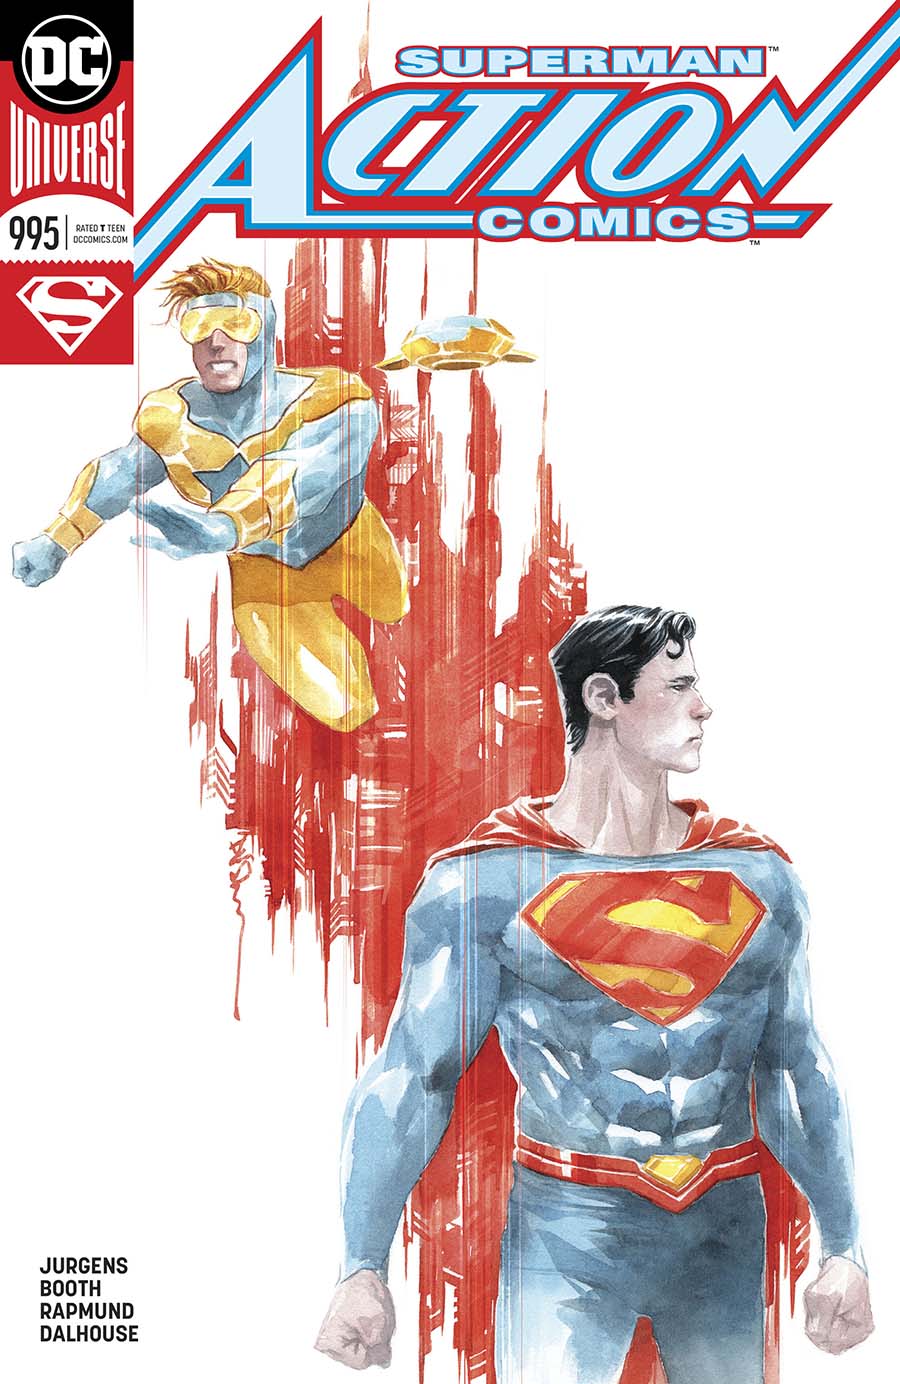 Action Comics Vol 2 #995 Cover B Variant Dustin Nguyen Cover